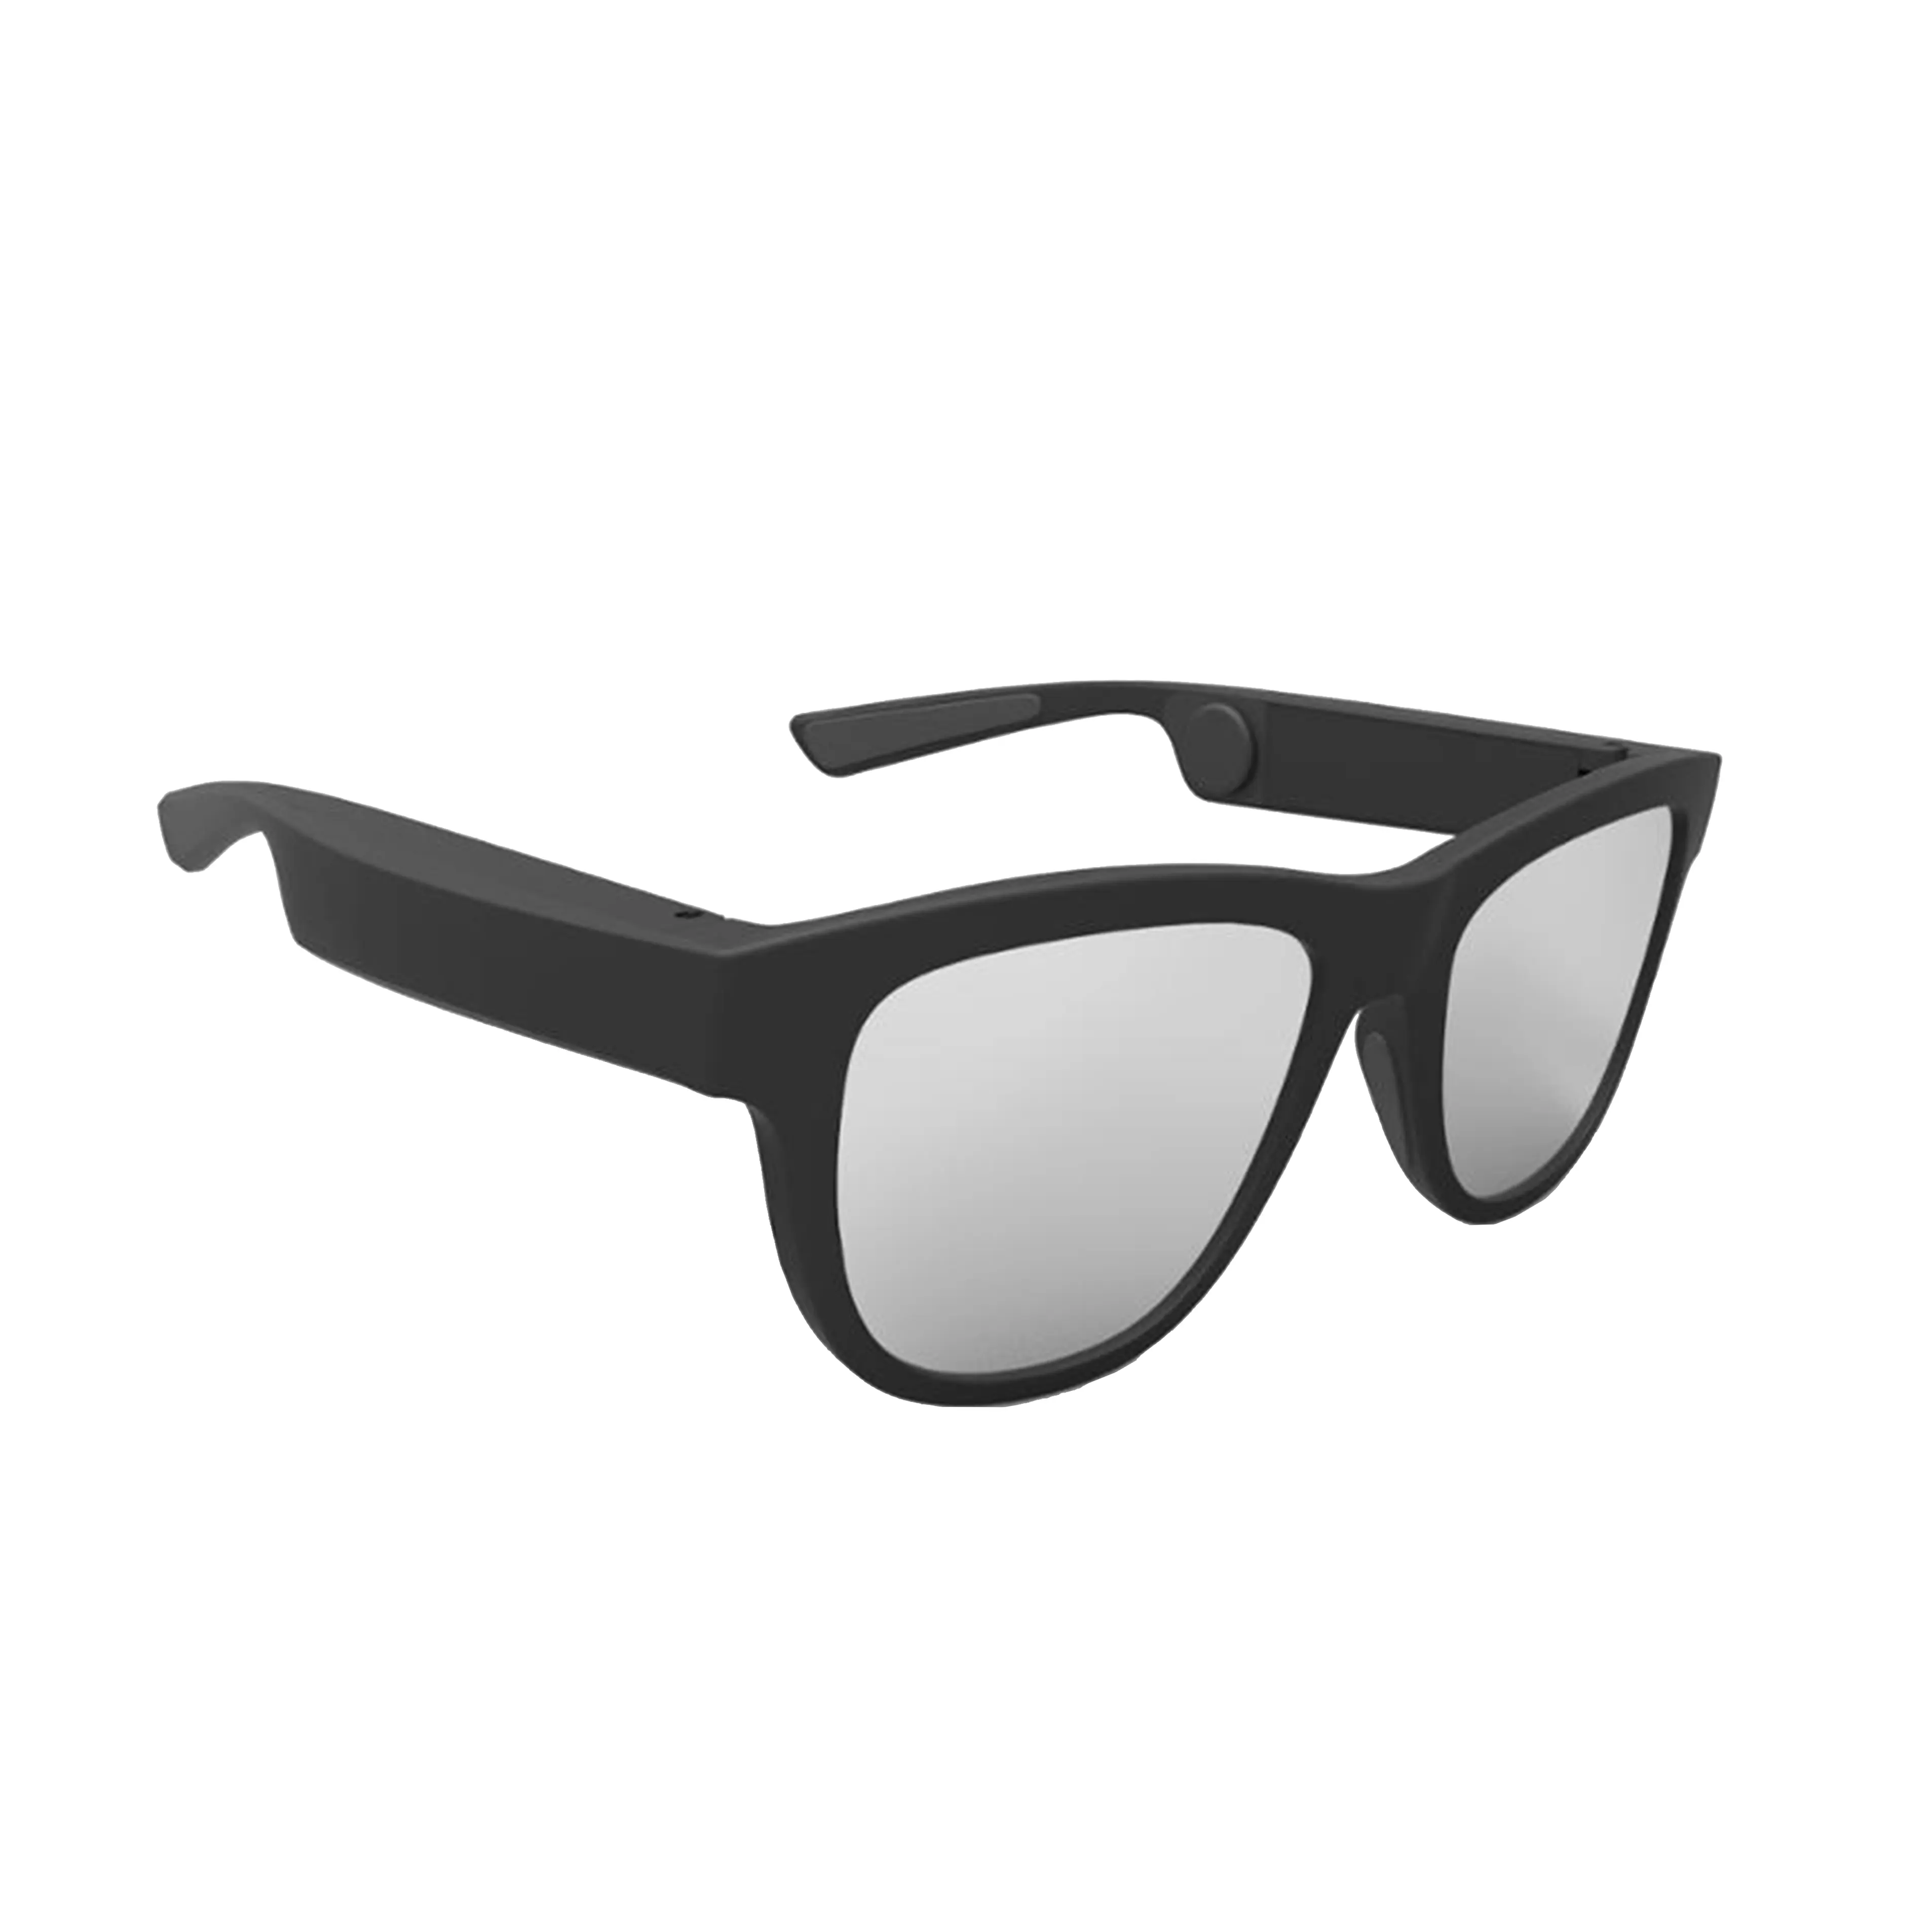 Gafas de sol de conducción ósea C010B tr90, montura con lentes polarizadas Tac Avaible para lentes de prescripción con auriculares